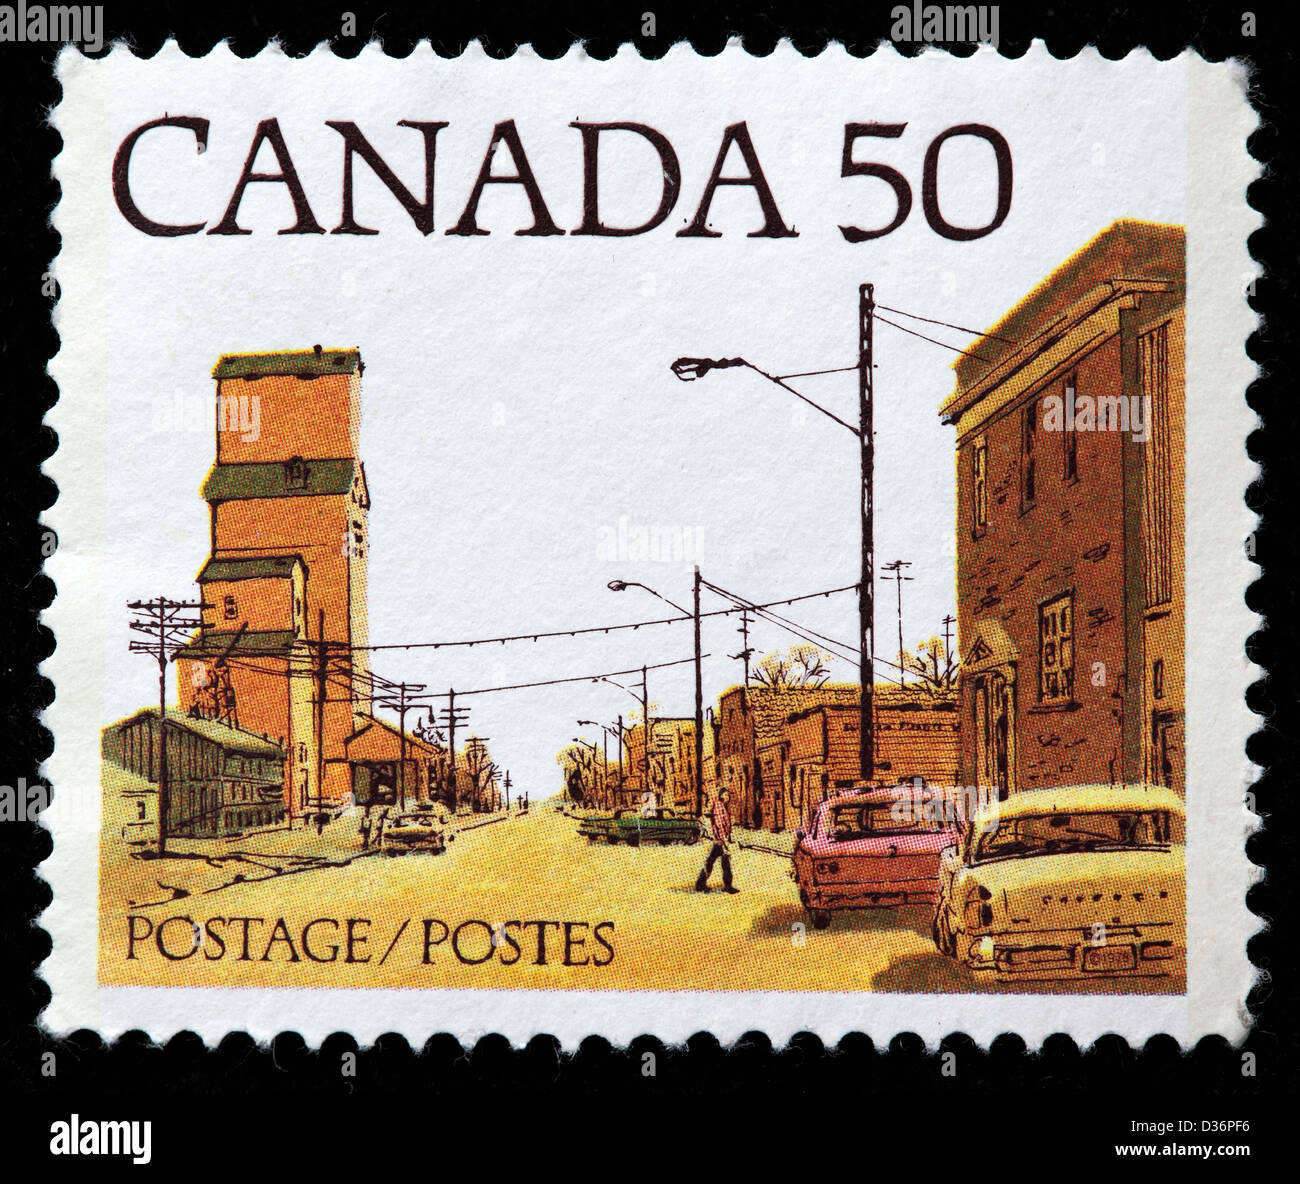 Prairie town street, postage stamp, Canada, 1978 Stock Photo